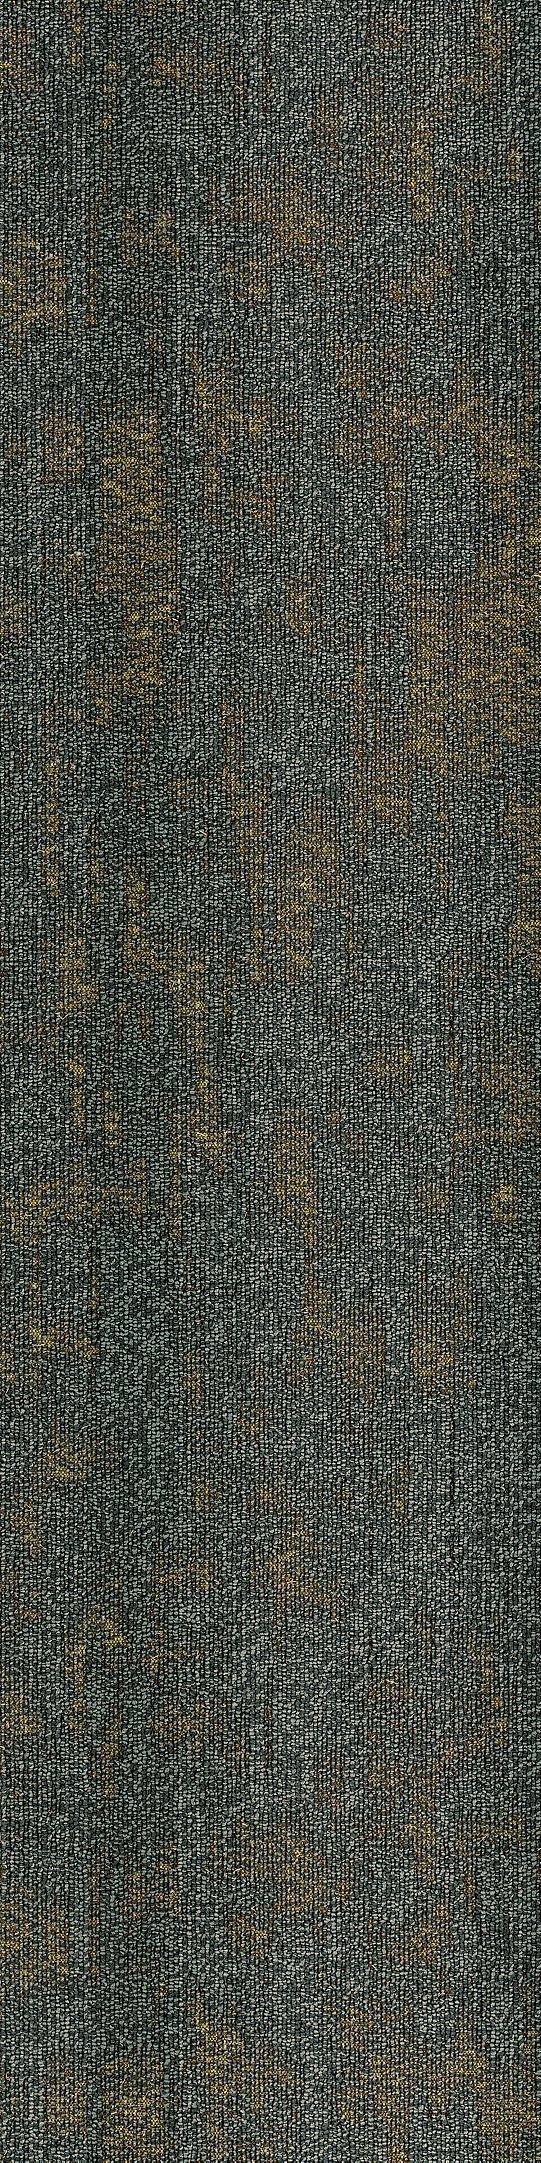 Shaw Metallic Alchemy Carpet Tile Patina Bronze